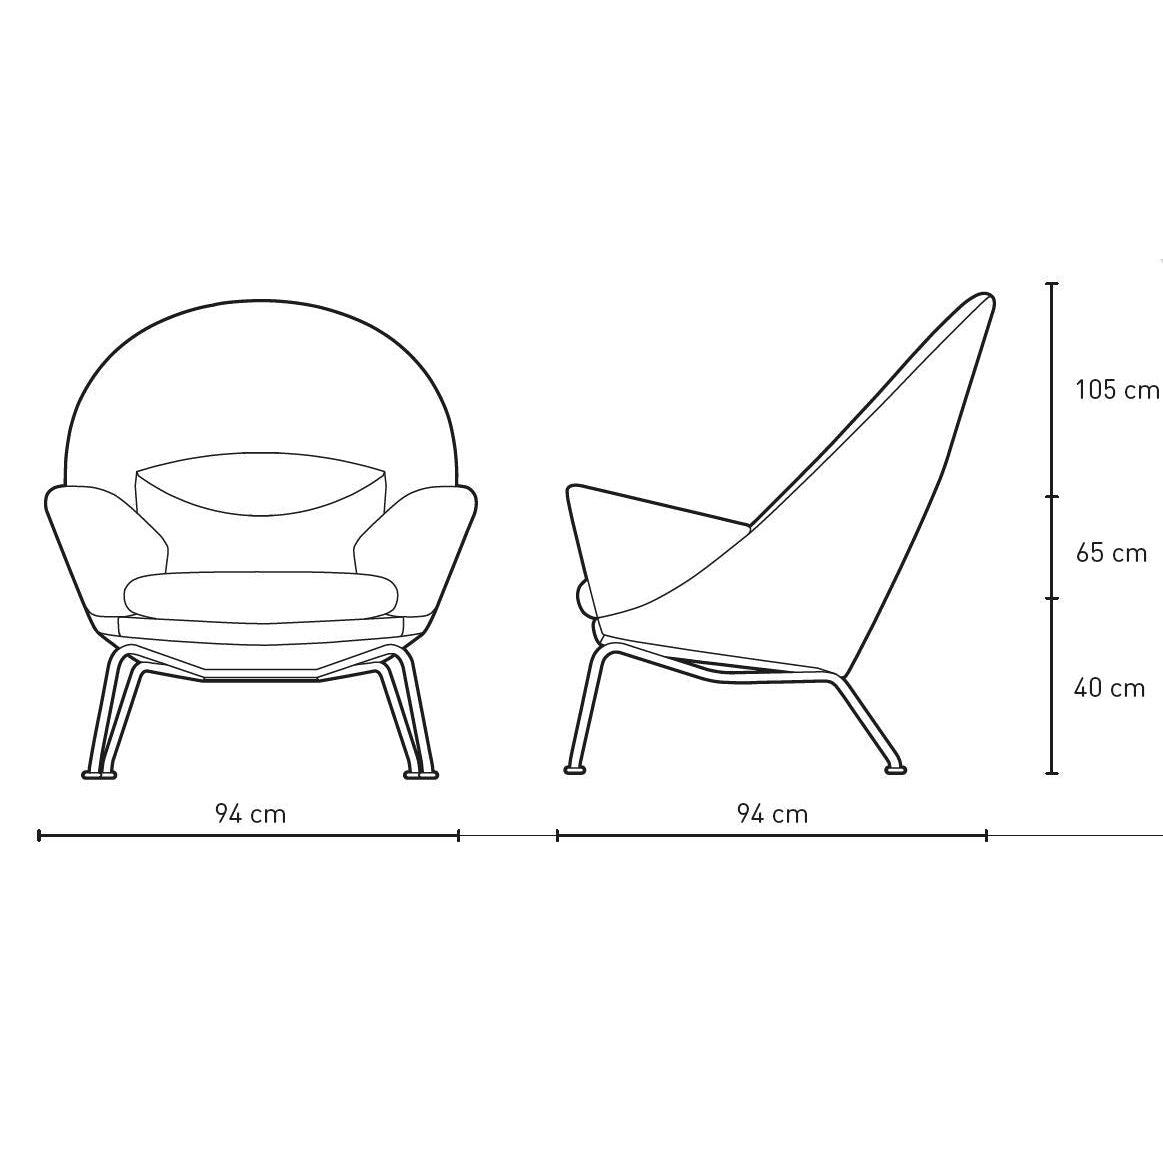 Carl Hansen CH468 Oculus stol, rostfritt stål, mörkgrå tyg